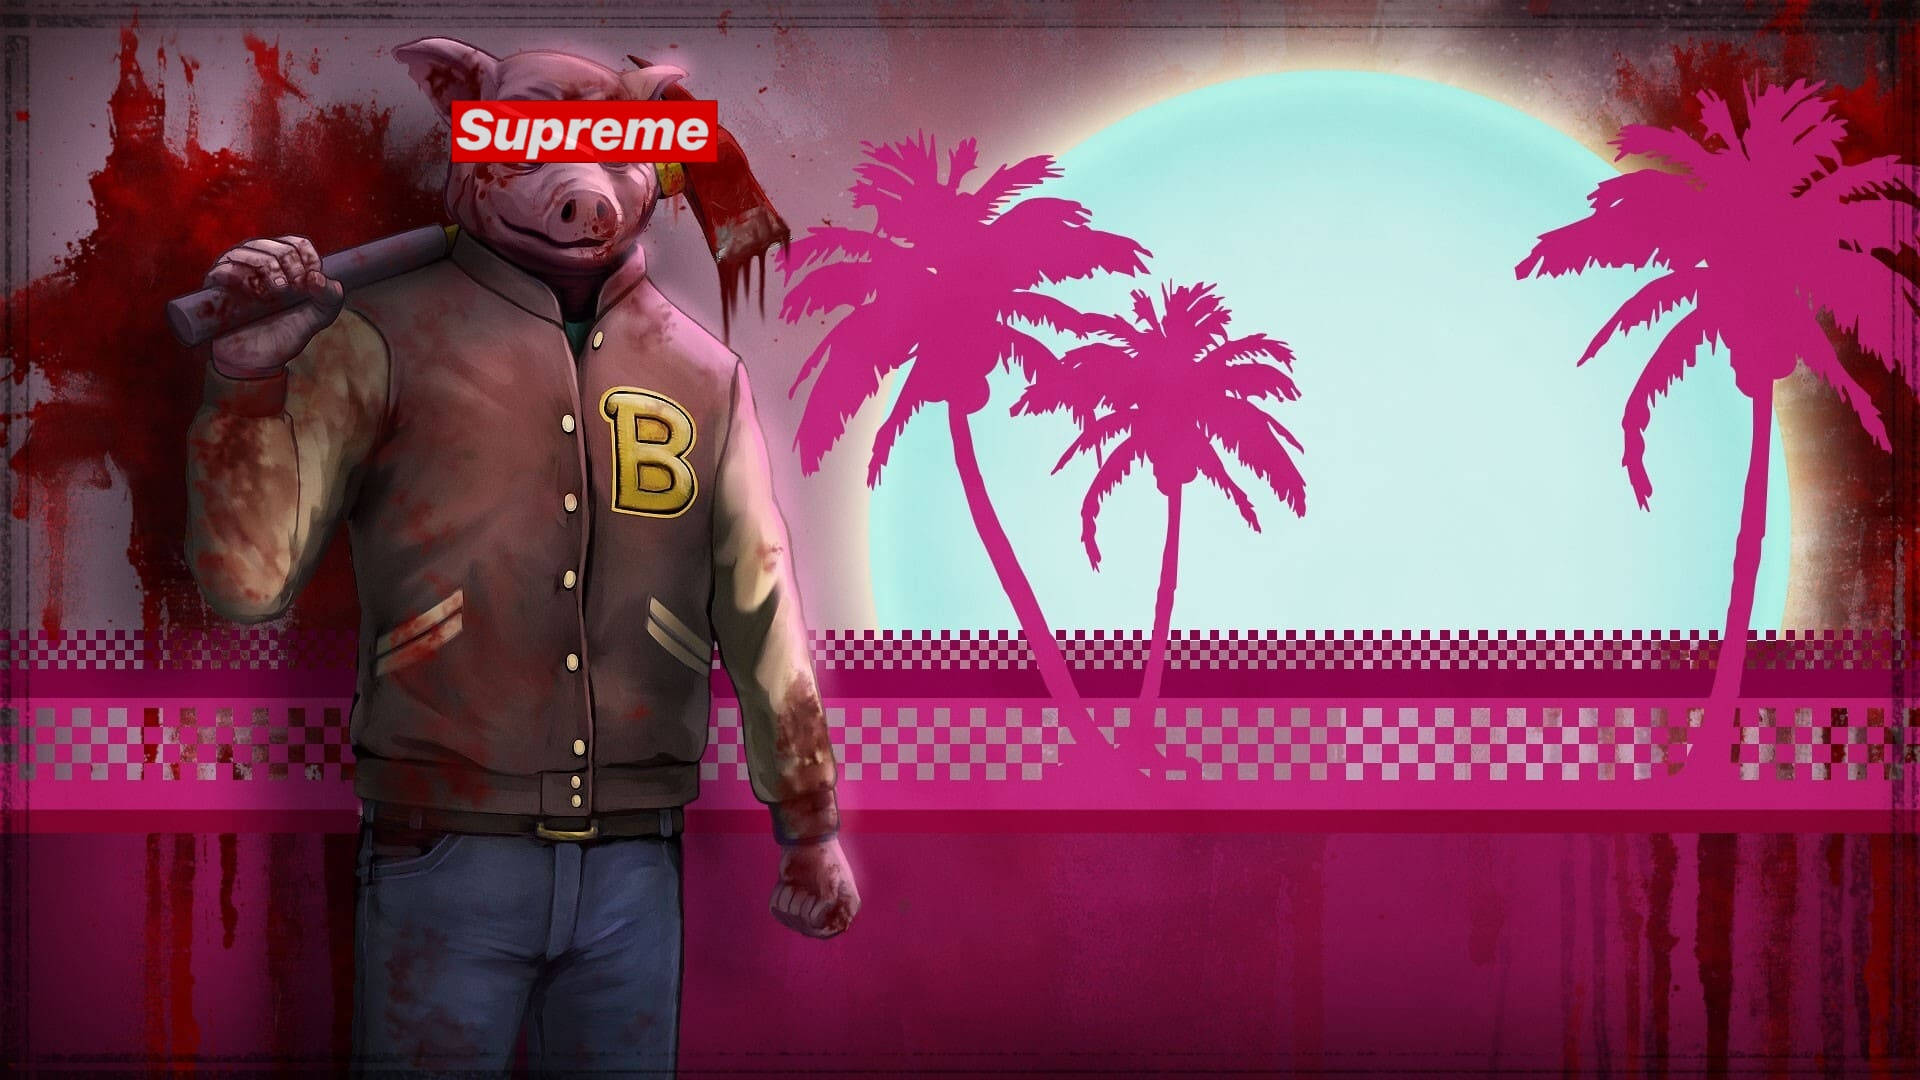 Cool Supreme Pig Axe Killer Background